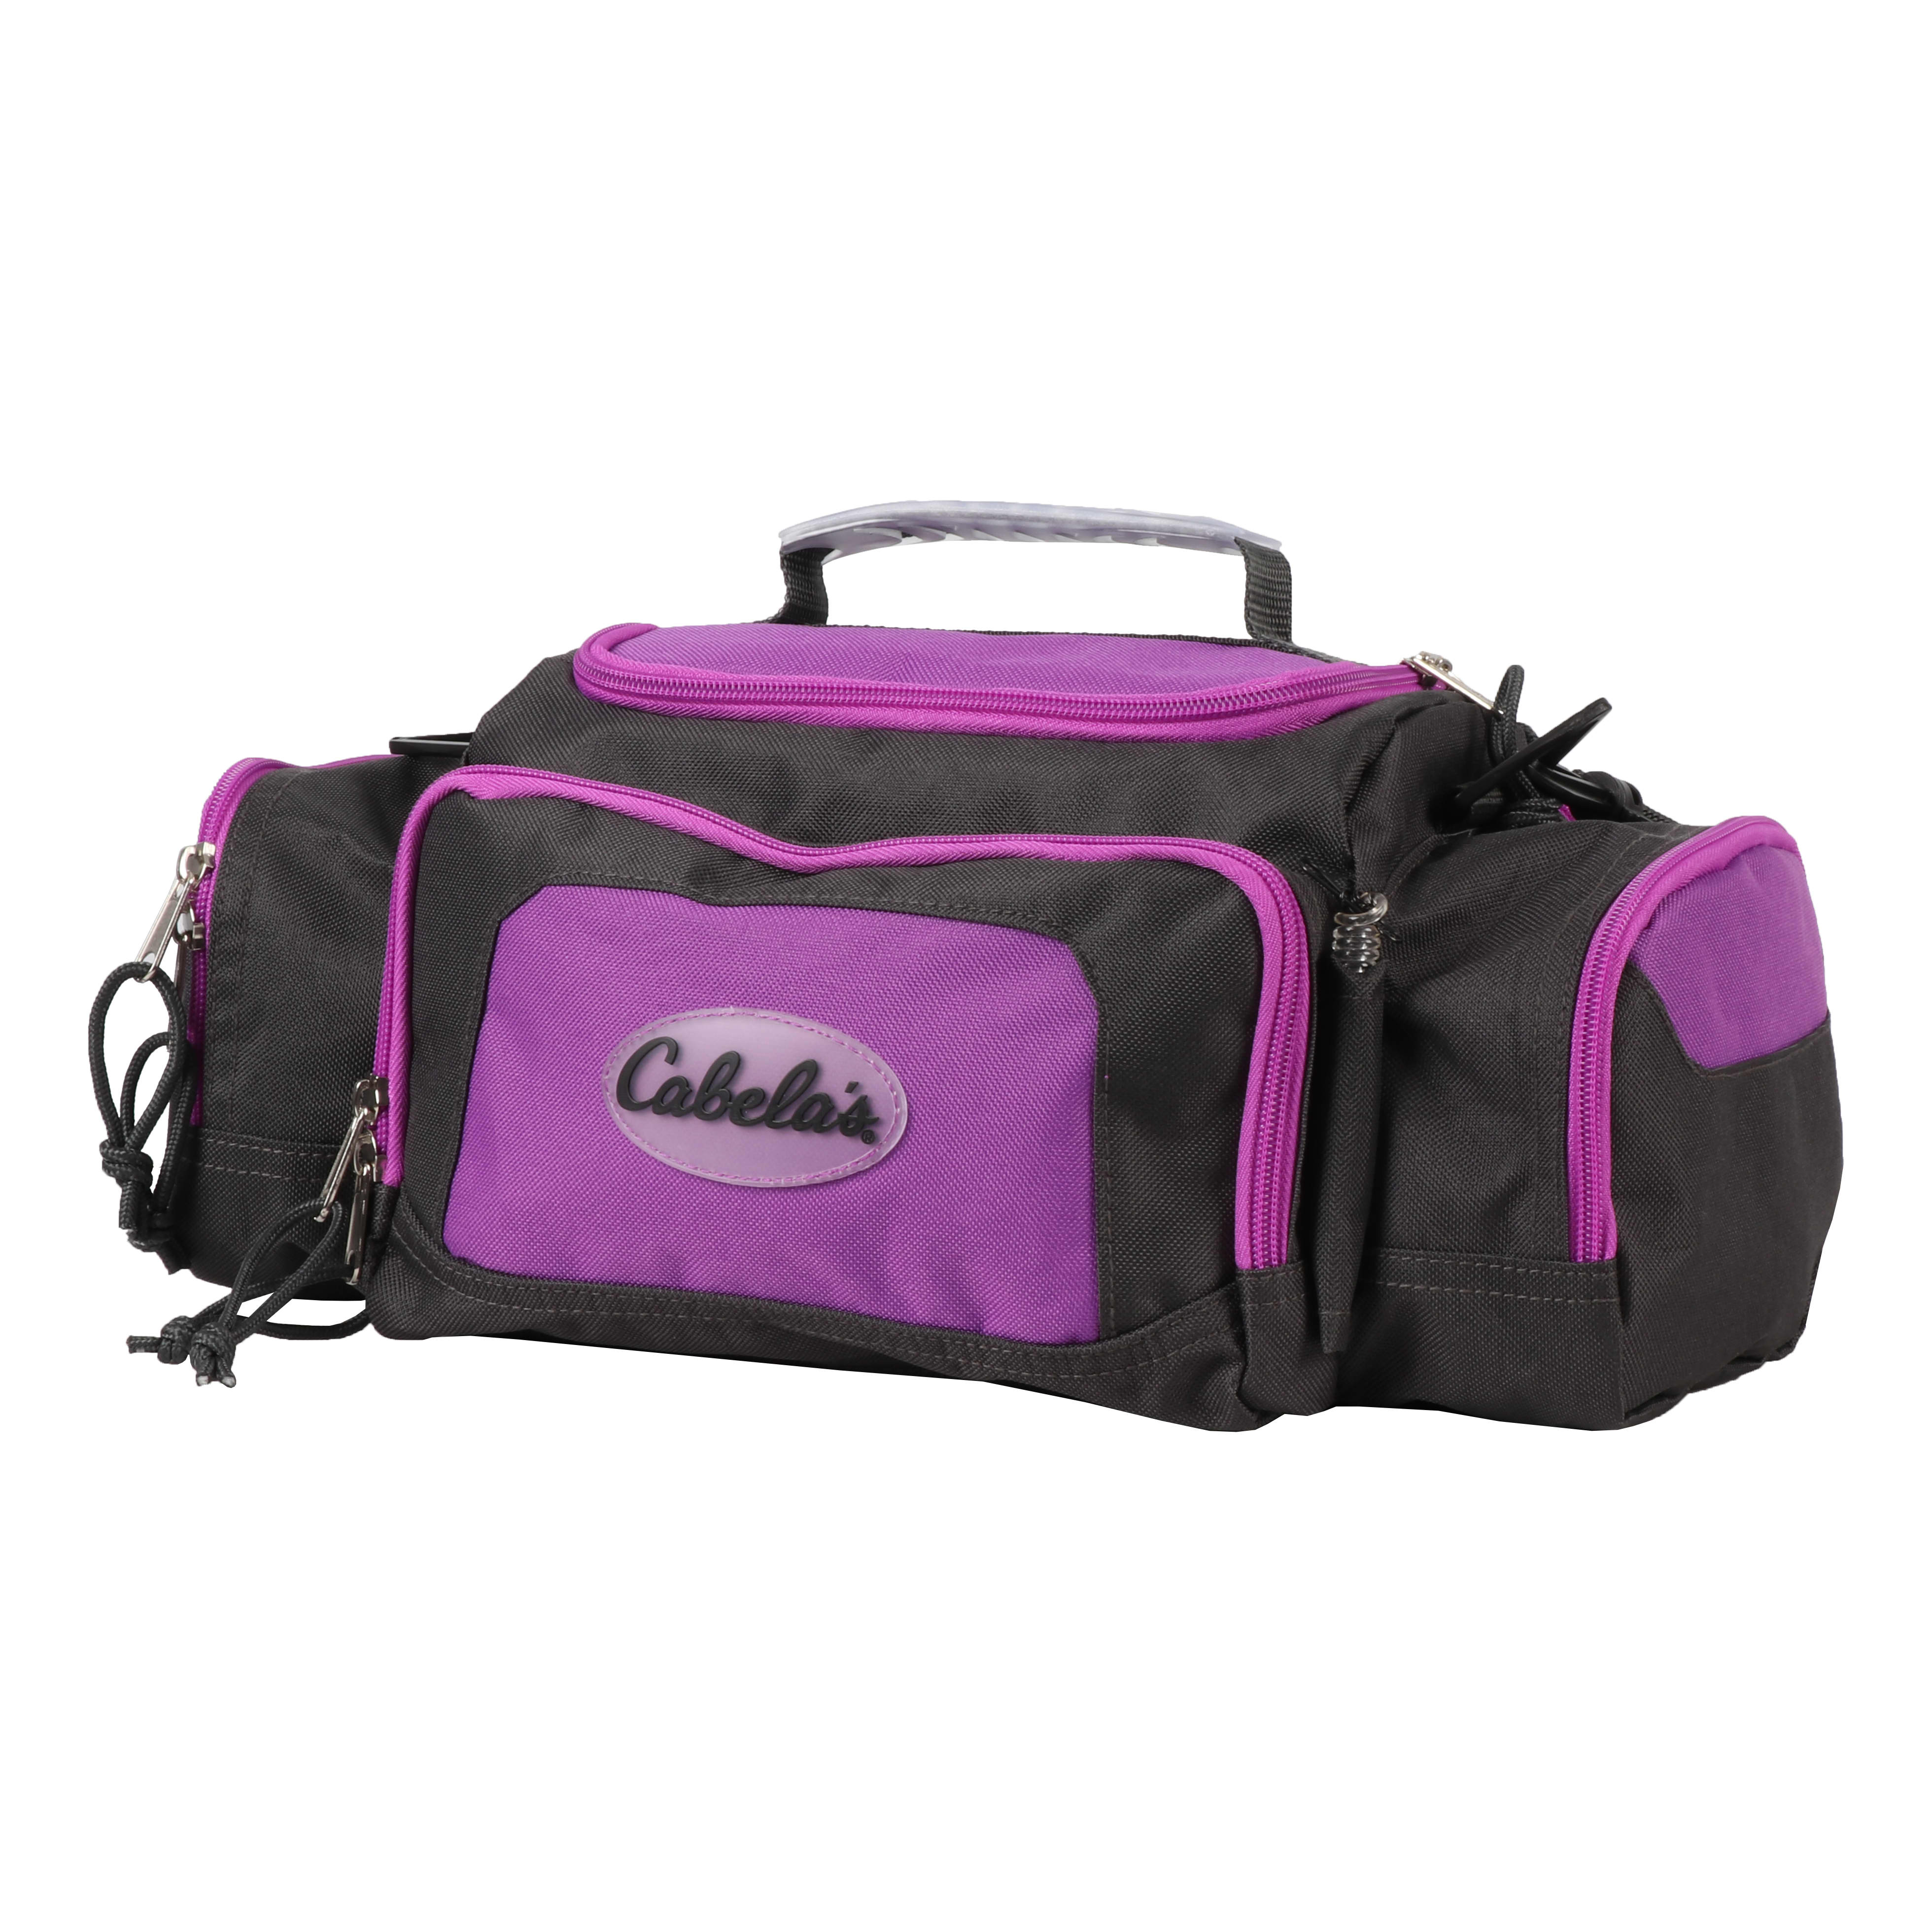 Cabela's Utility Bag - Purple